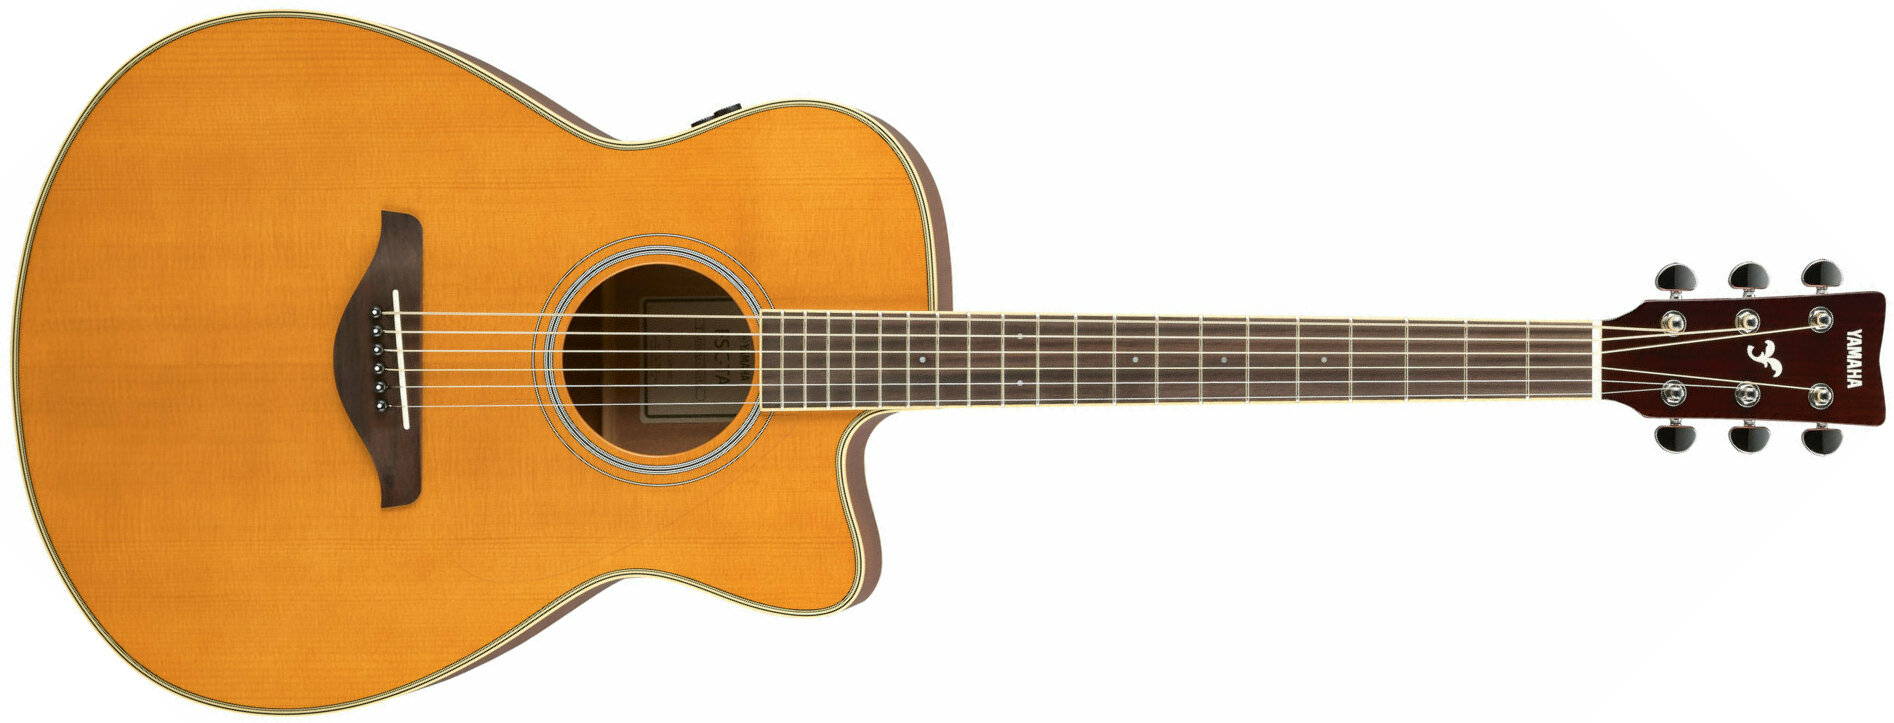 Yamaha Fsc-ta Transacoustic Cutaway Epicea Acajou Rw - Vintage Tint - Acoustic guitar & electro - Main picture